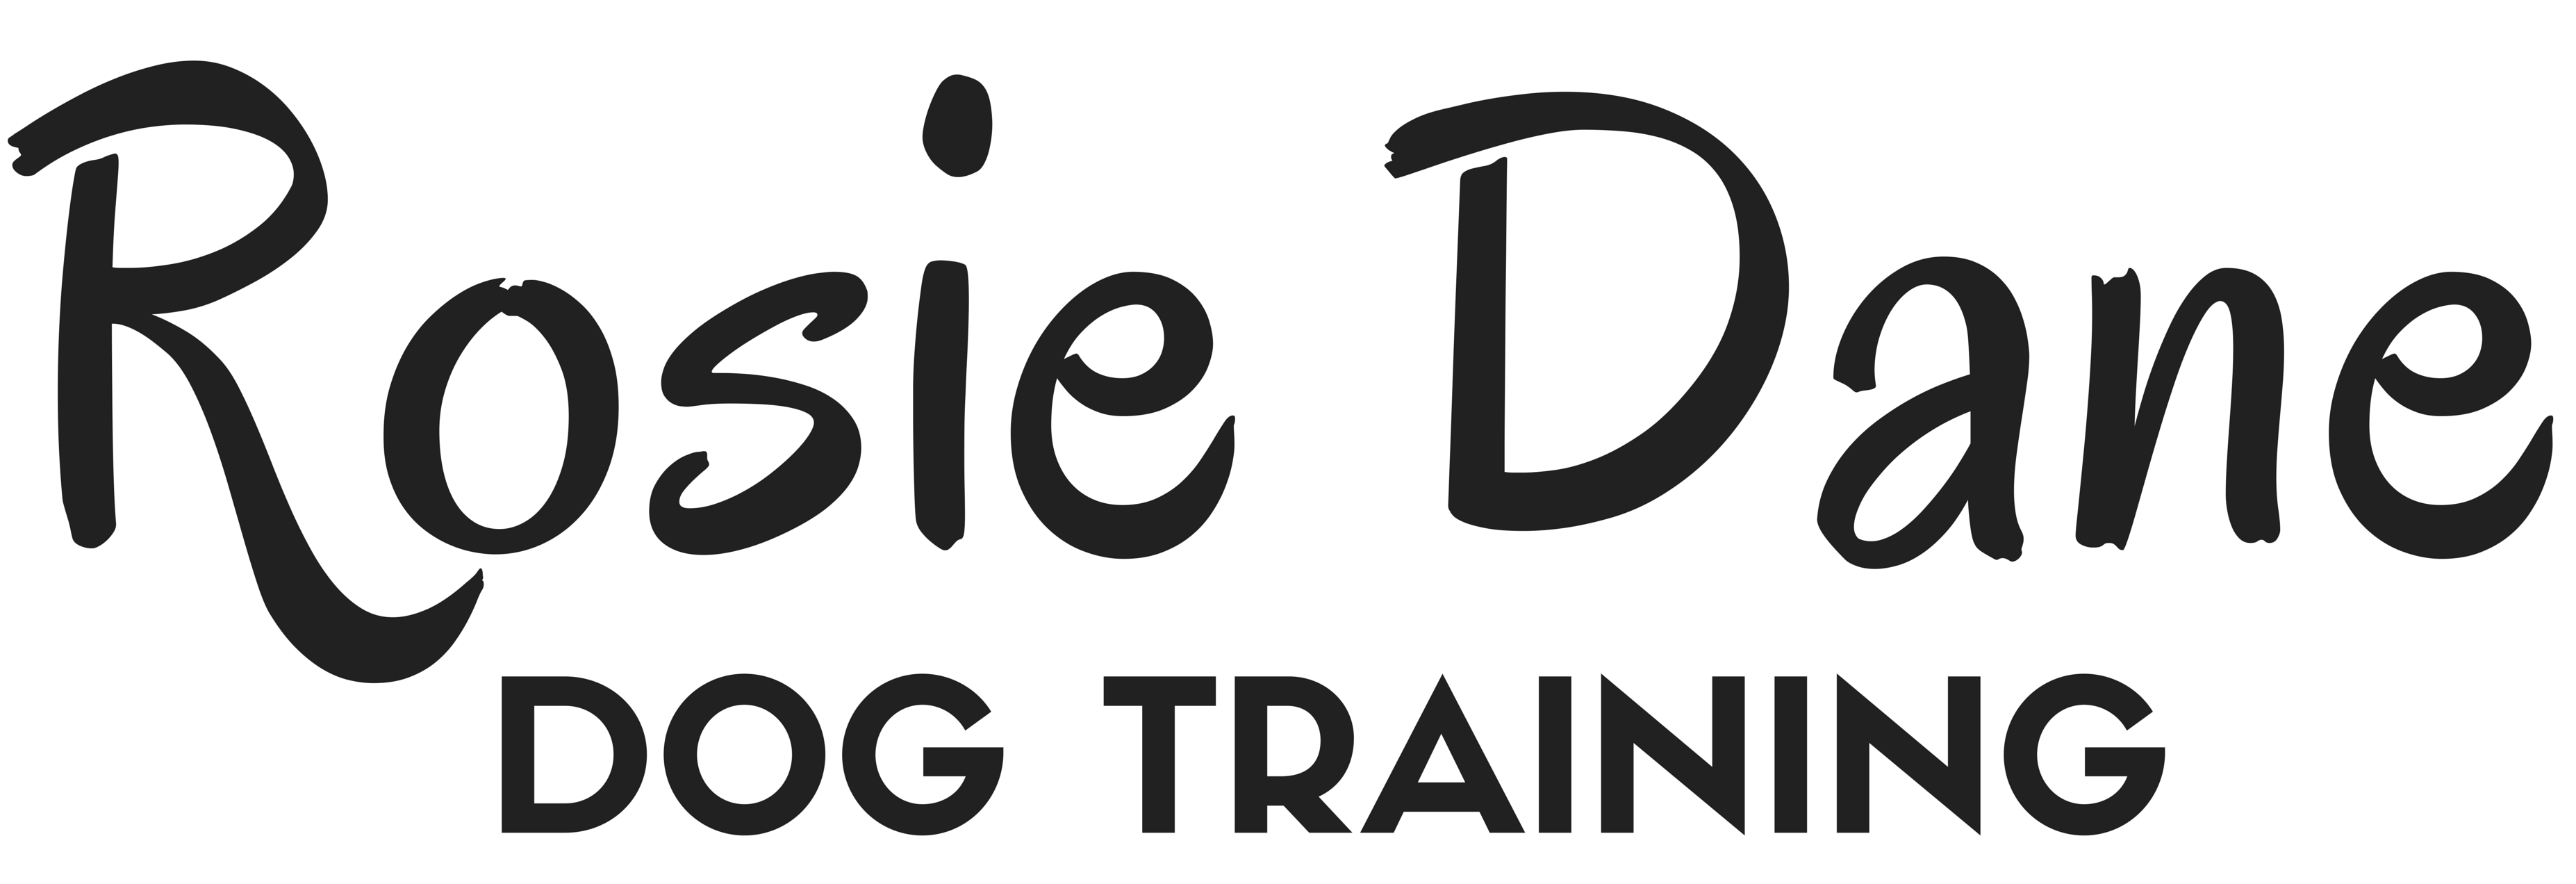 Dog Training in Louisville, KY